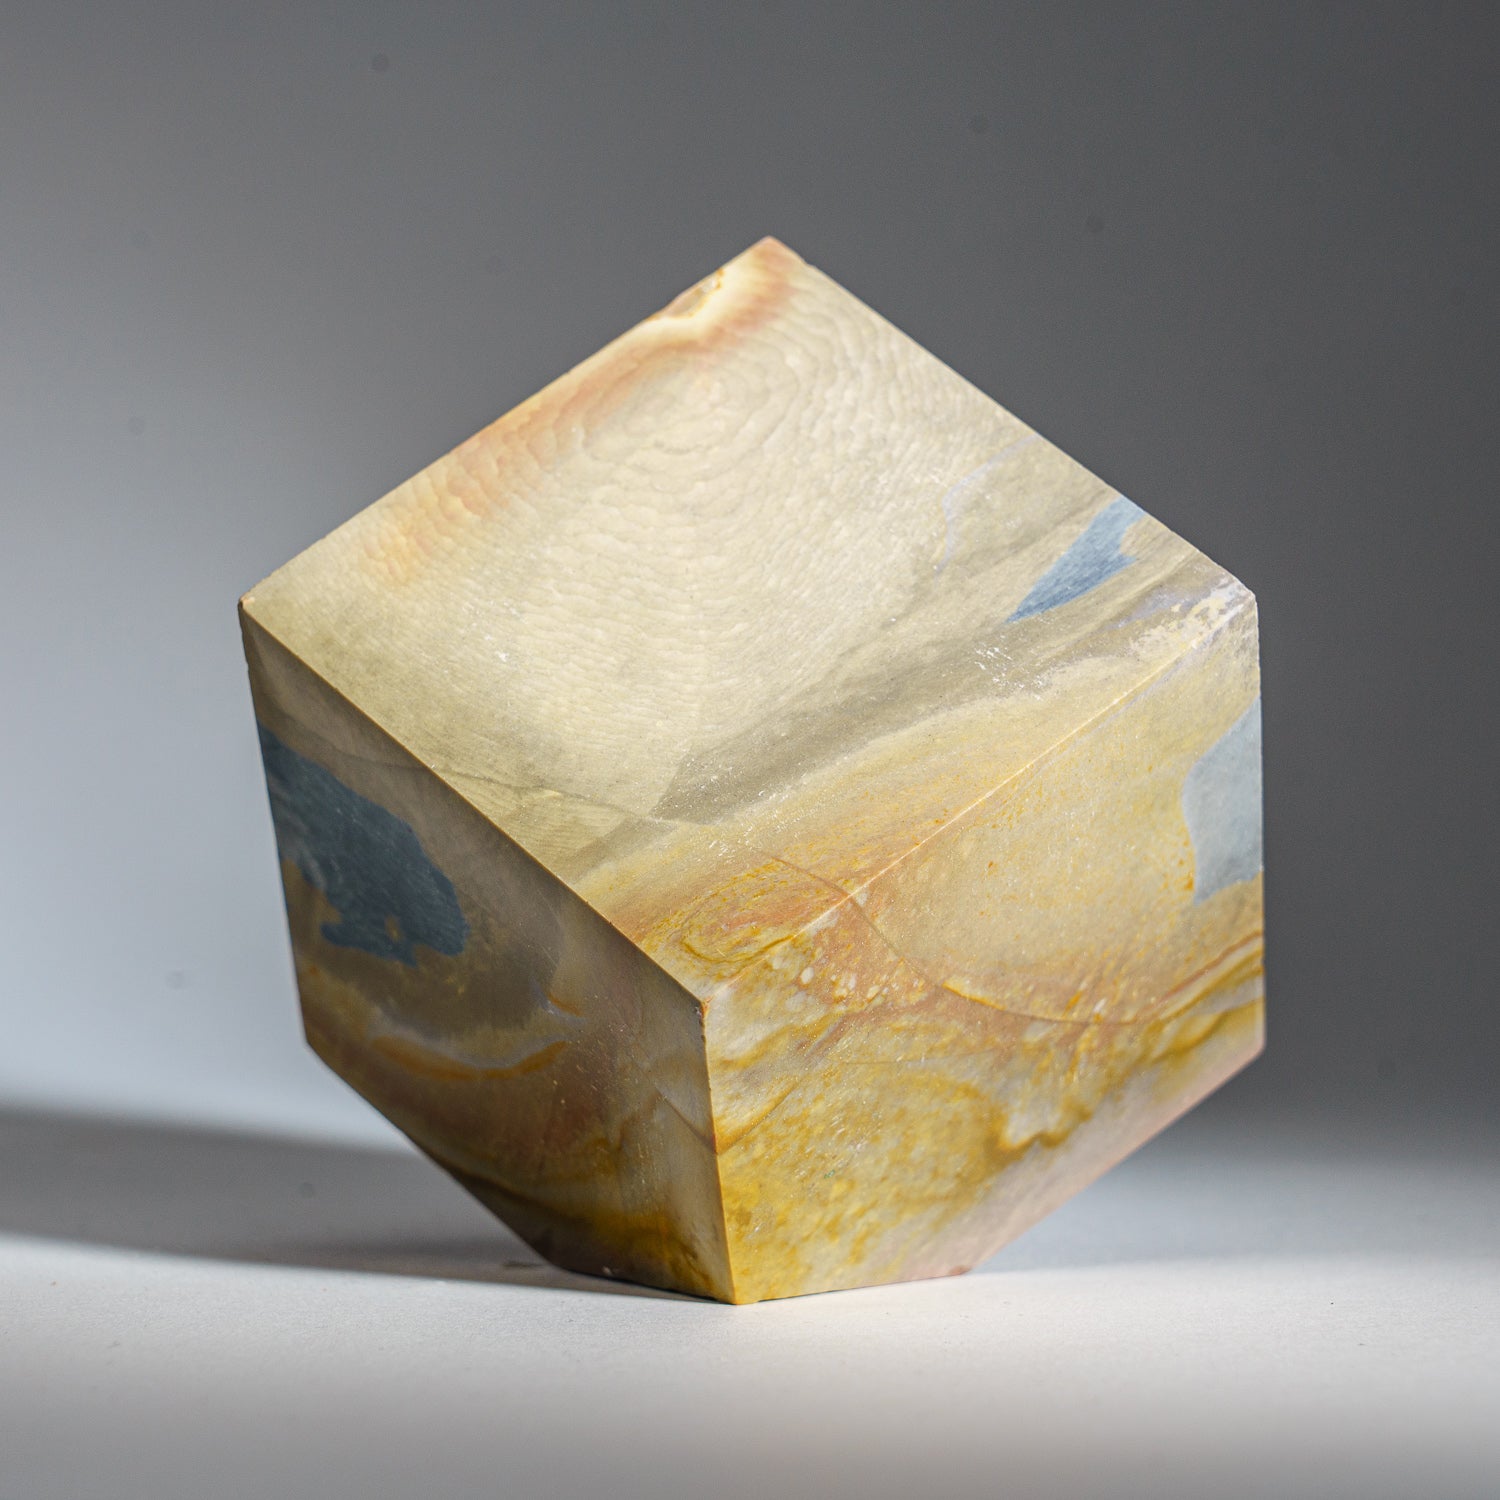 Polished Polychrome Jasper Cube from Madagascar (2.4 lbs)